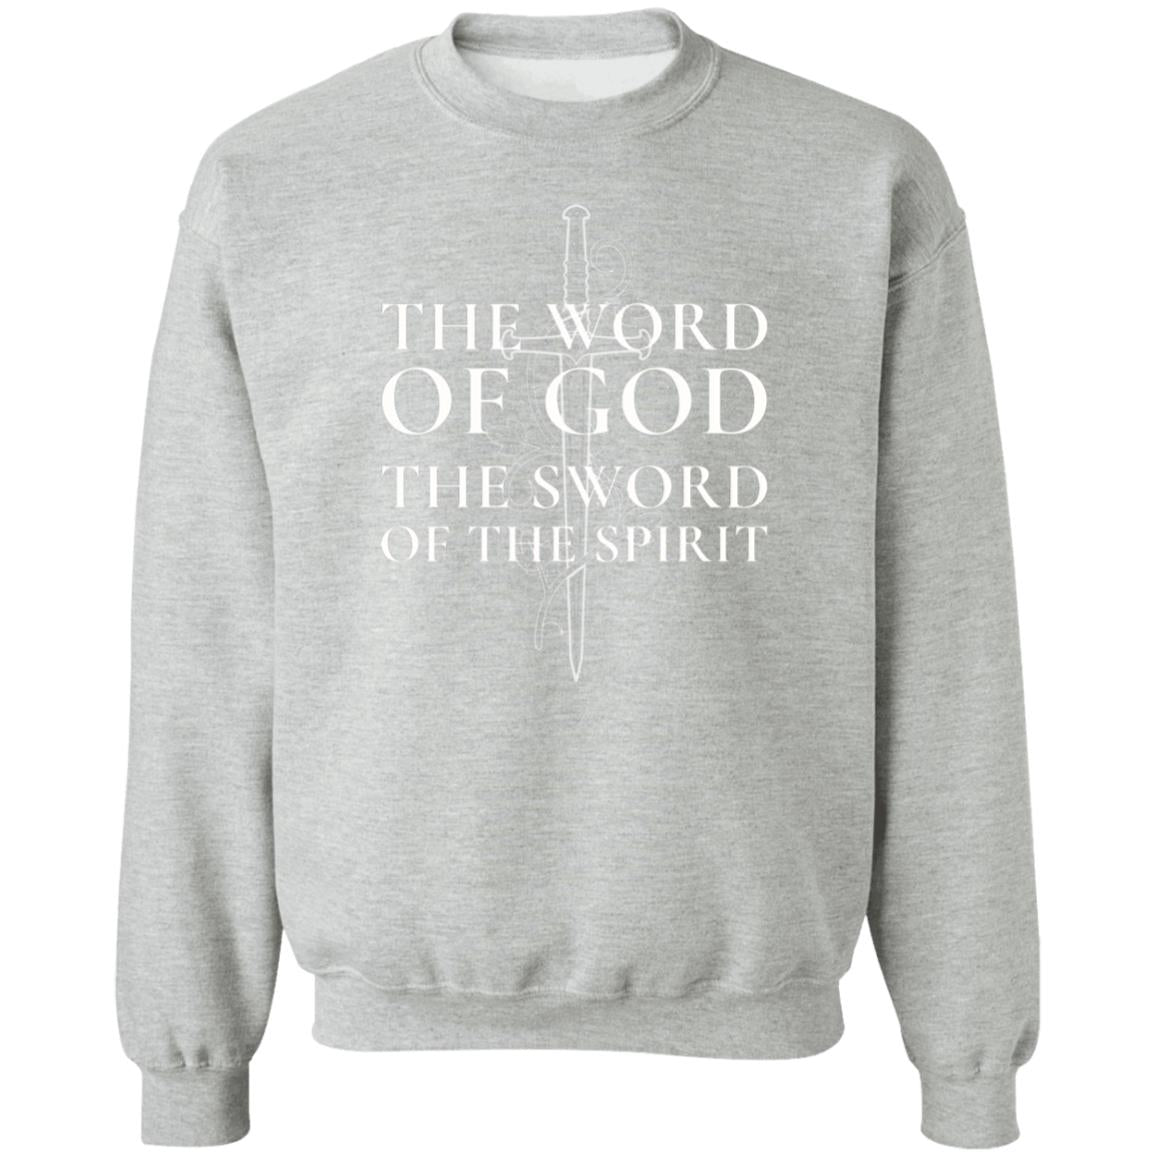 Word of God - Sword of the Spirit (Unisex Sweatshirt)